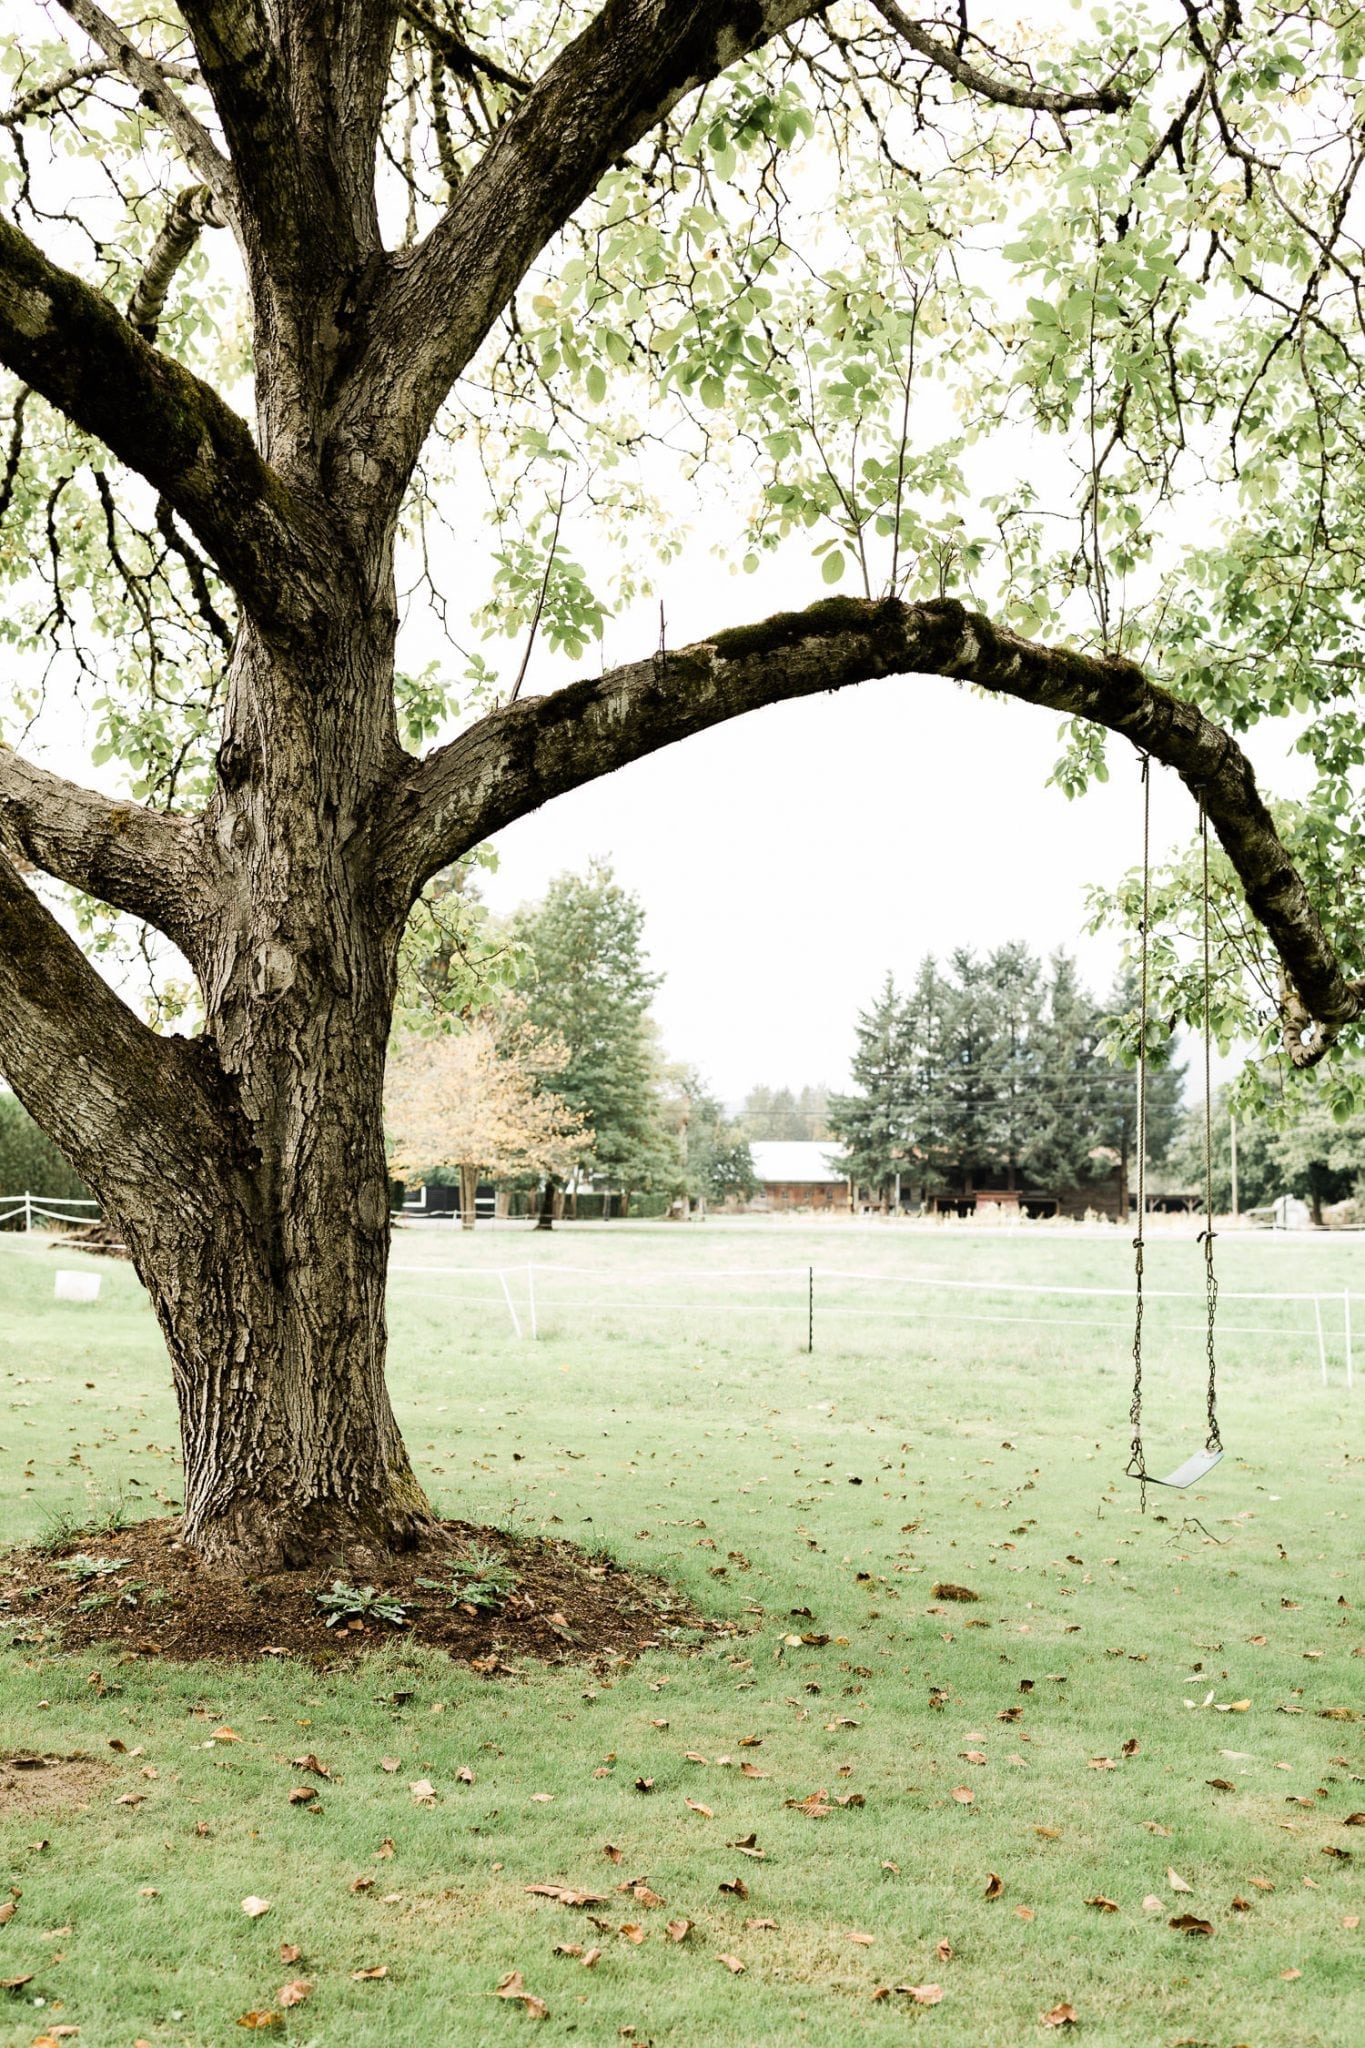 Swings on the tree | Vancouver wedding photographer